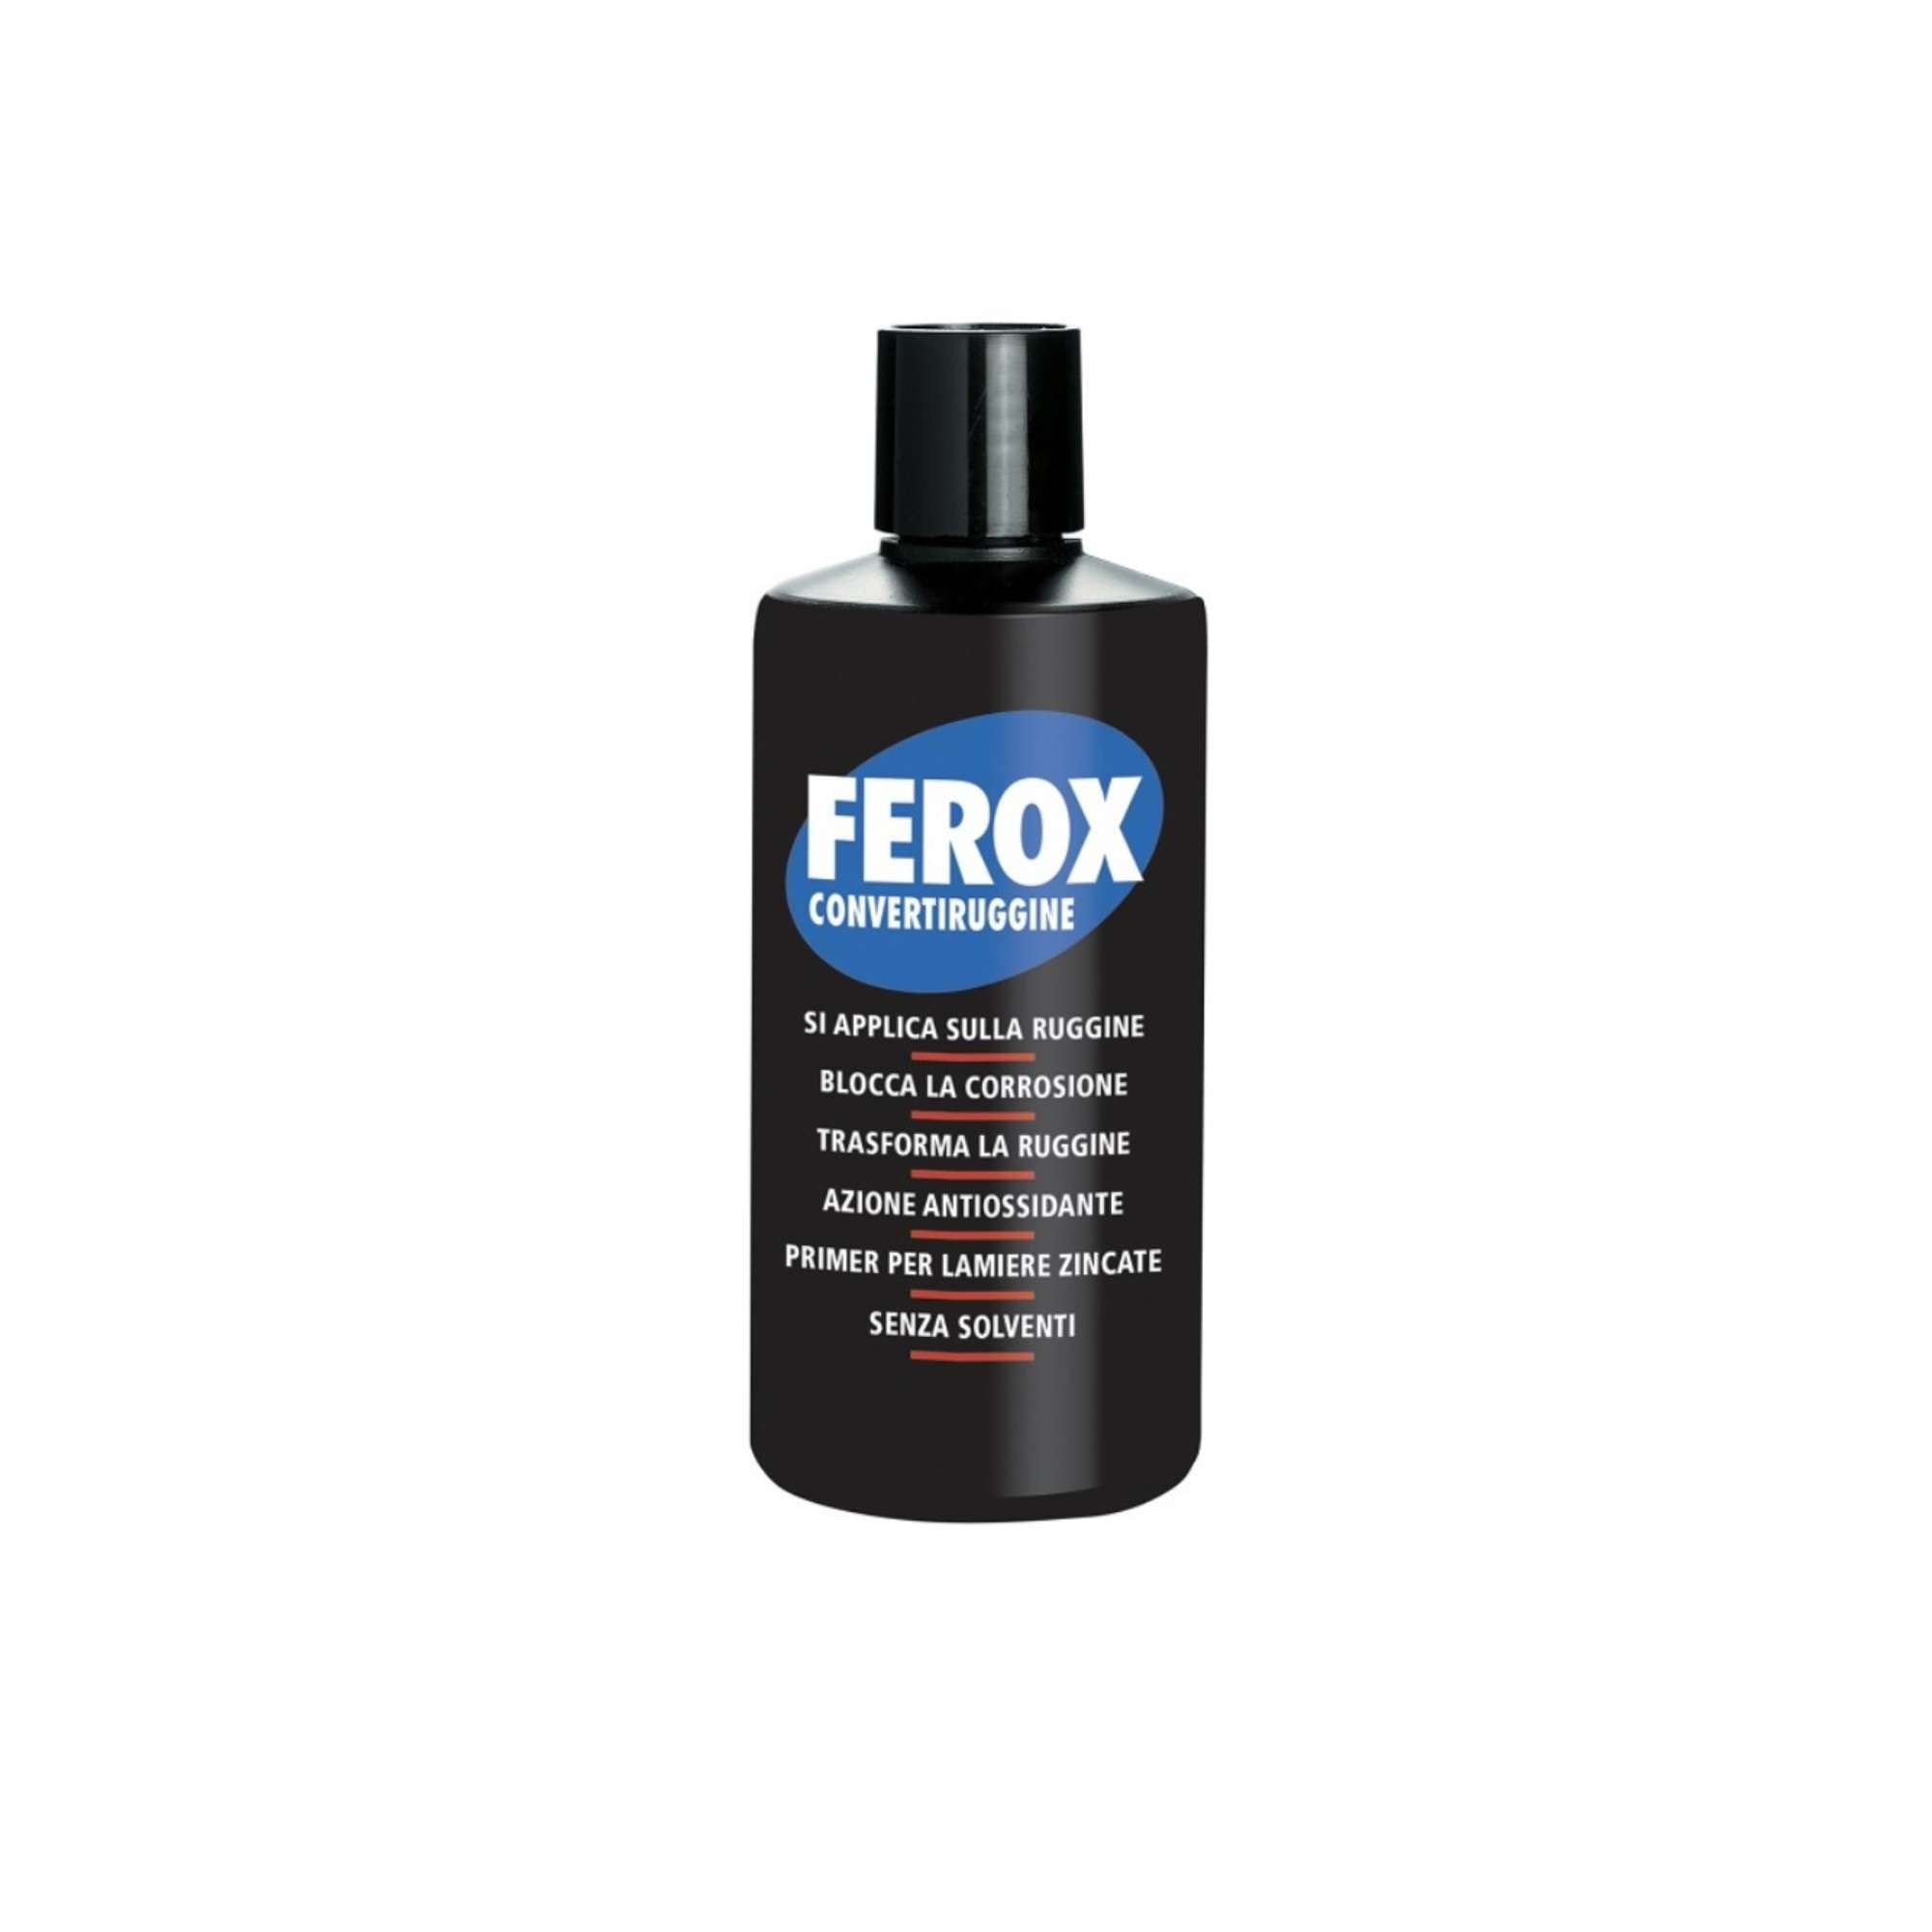 Convertiruggine Ferox - Arexons